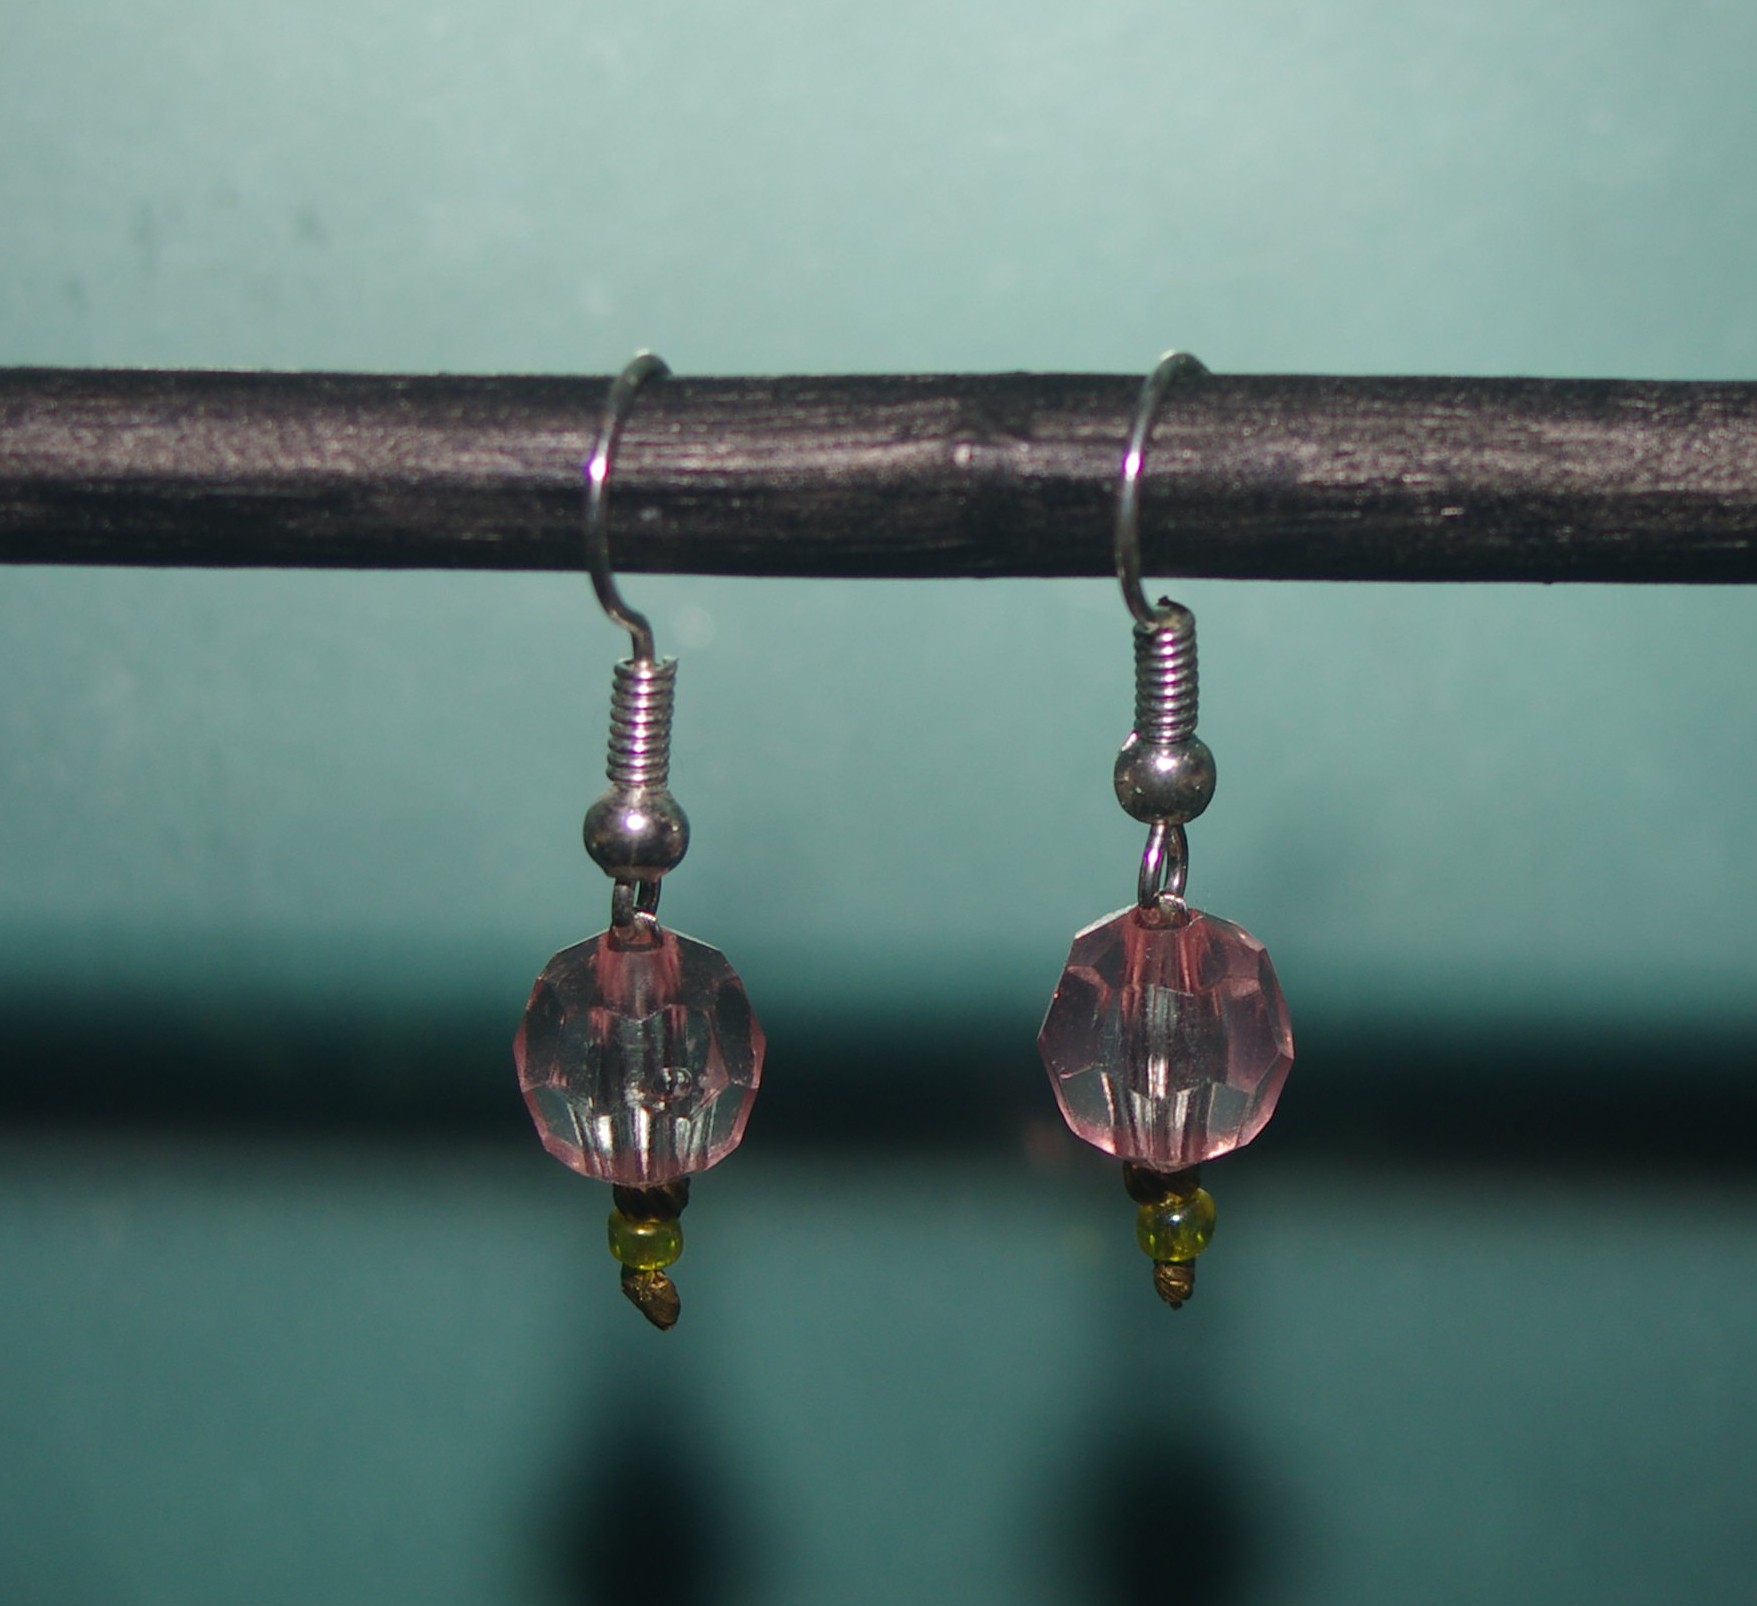 Chinese Lantern Earrings